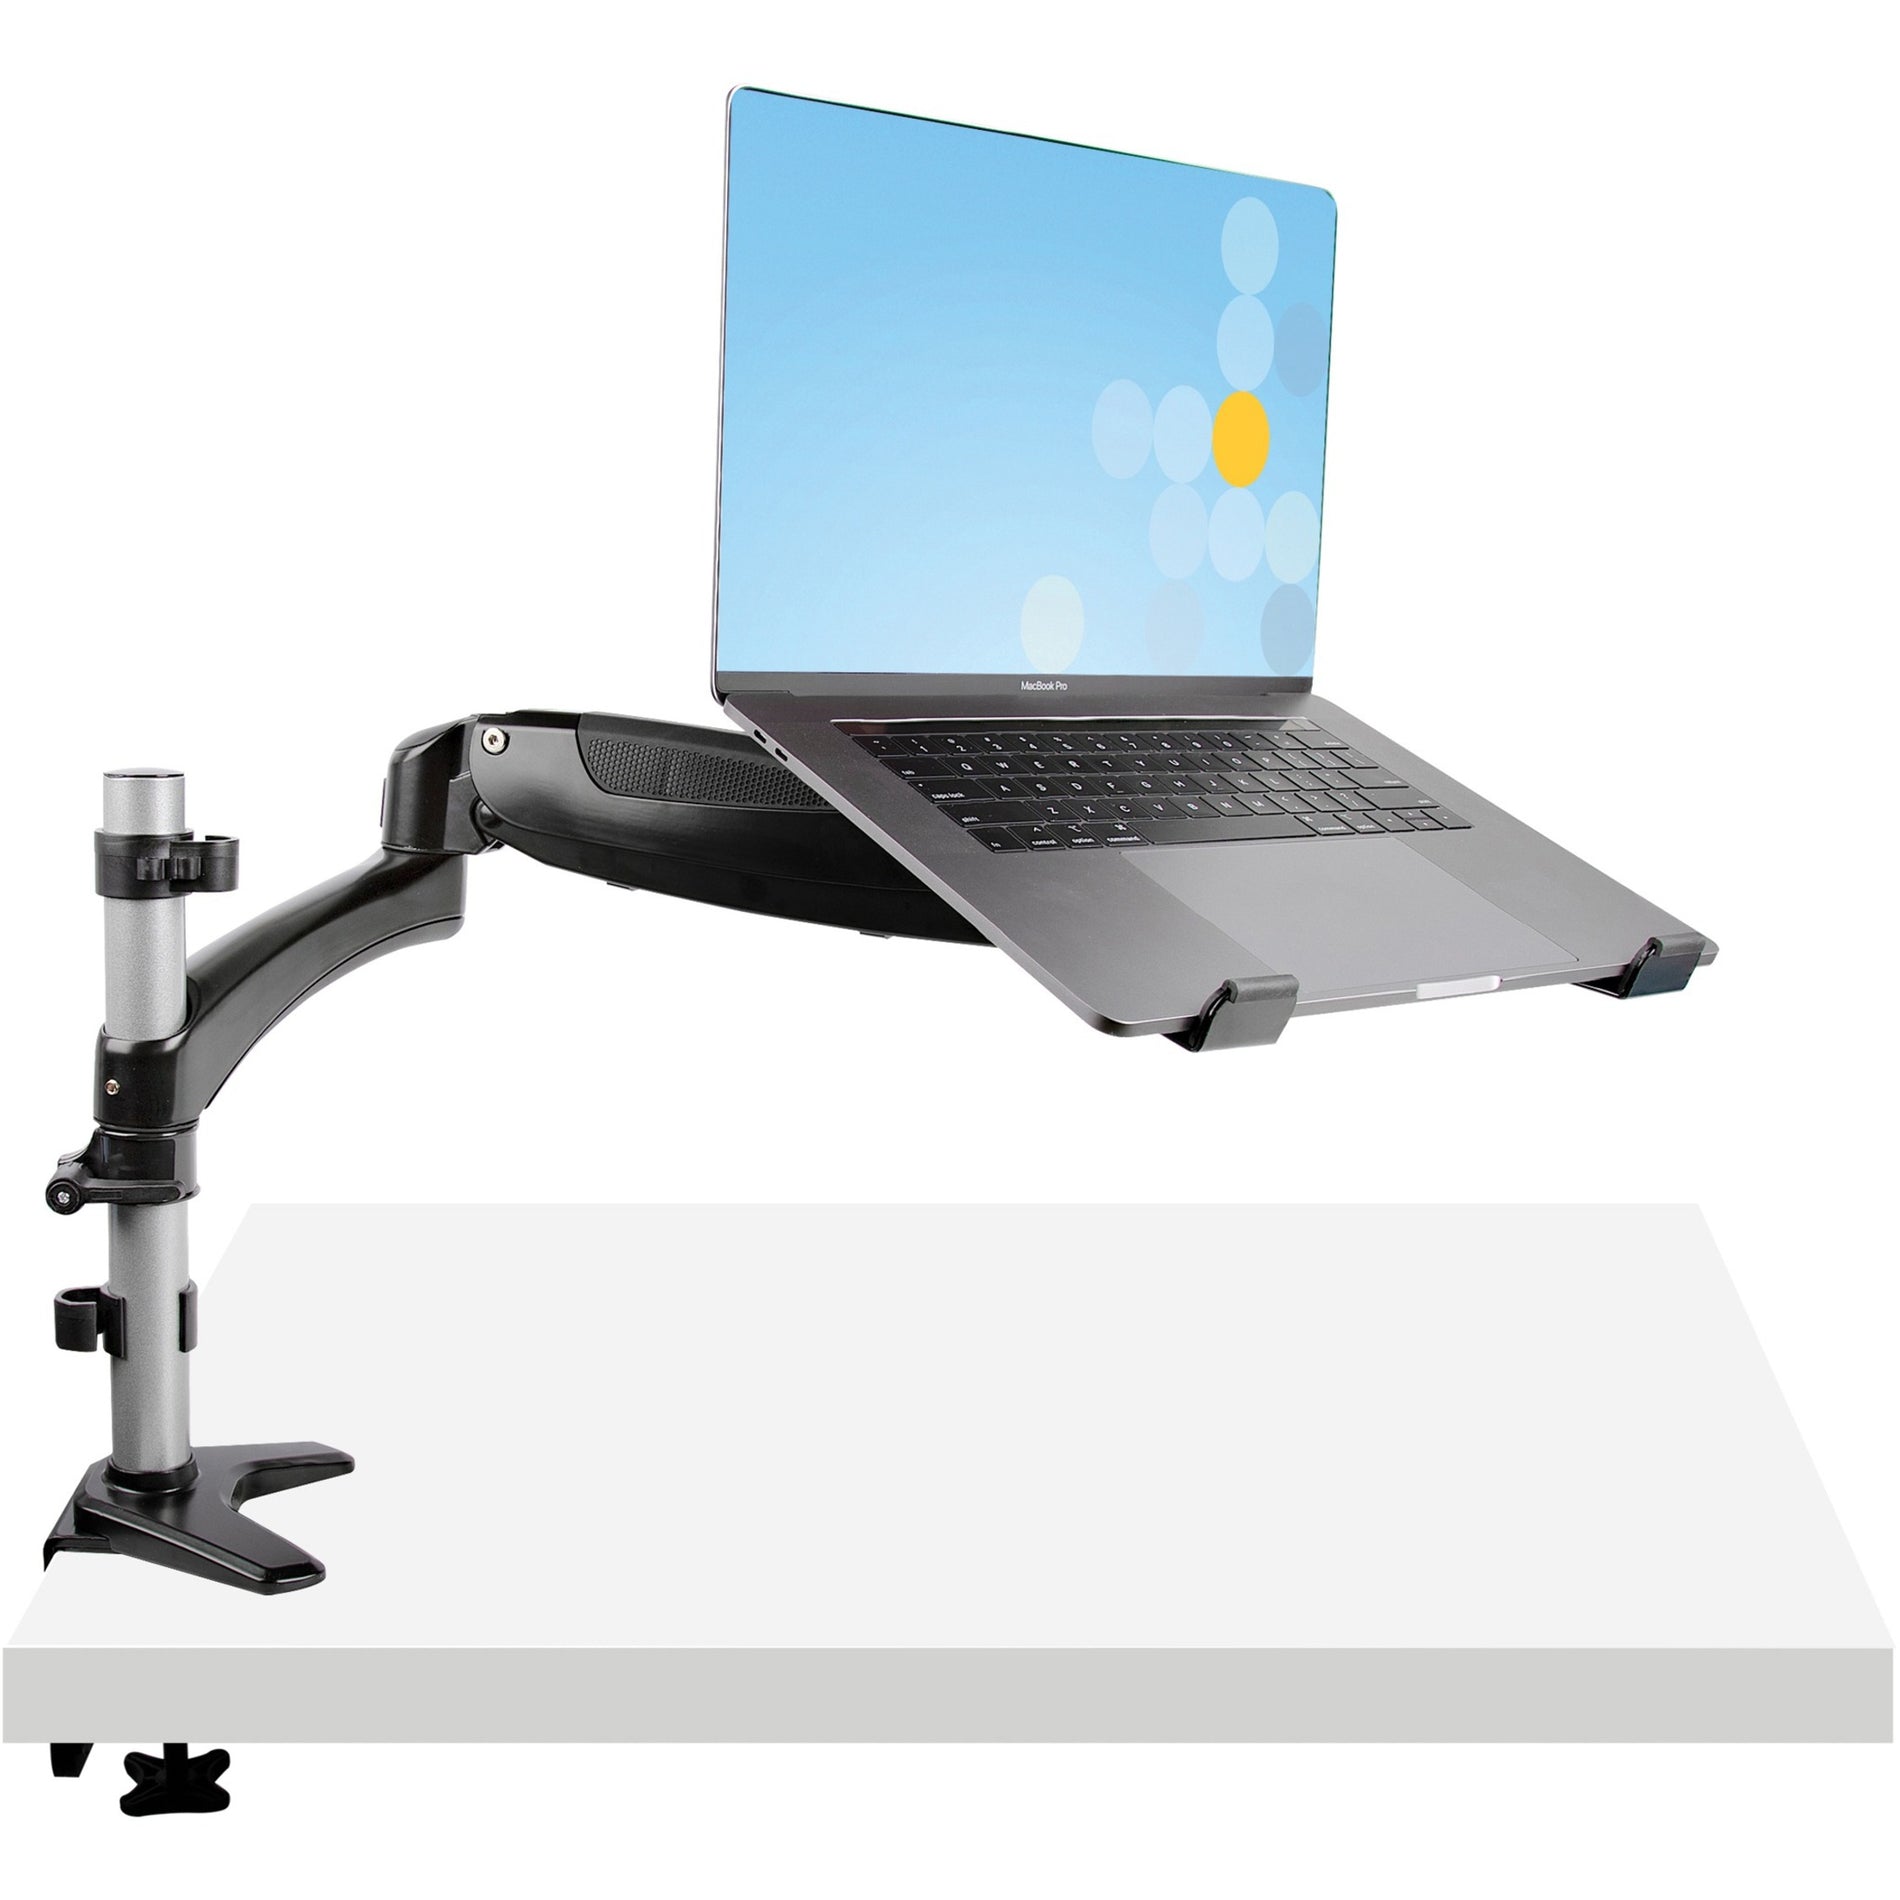 StarTech.com ARMUNONB1 Desk Mount Laptop Arm, Full Motion Articulating Arm/Stand for Laptop or 34 inch Monitor, VESA Mount Laptop Tray, Adjustable